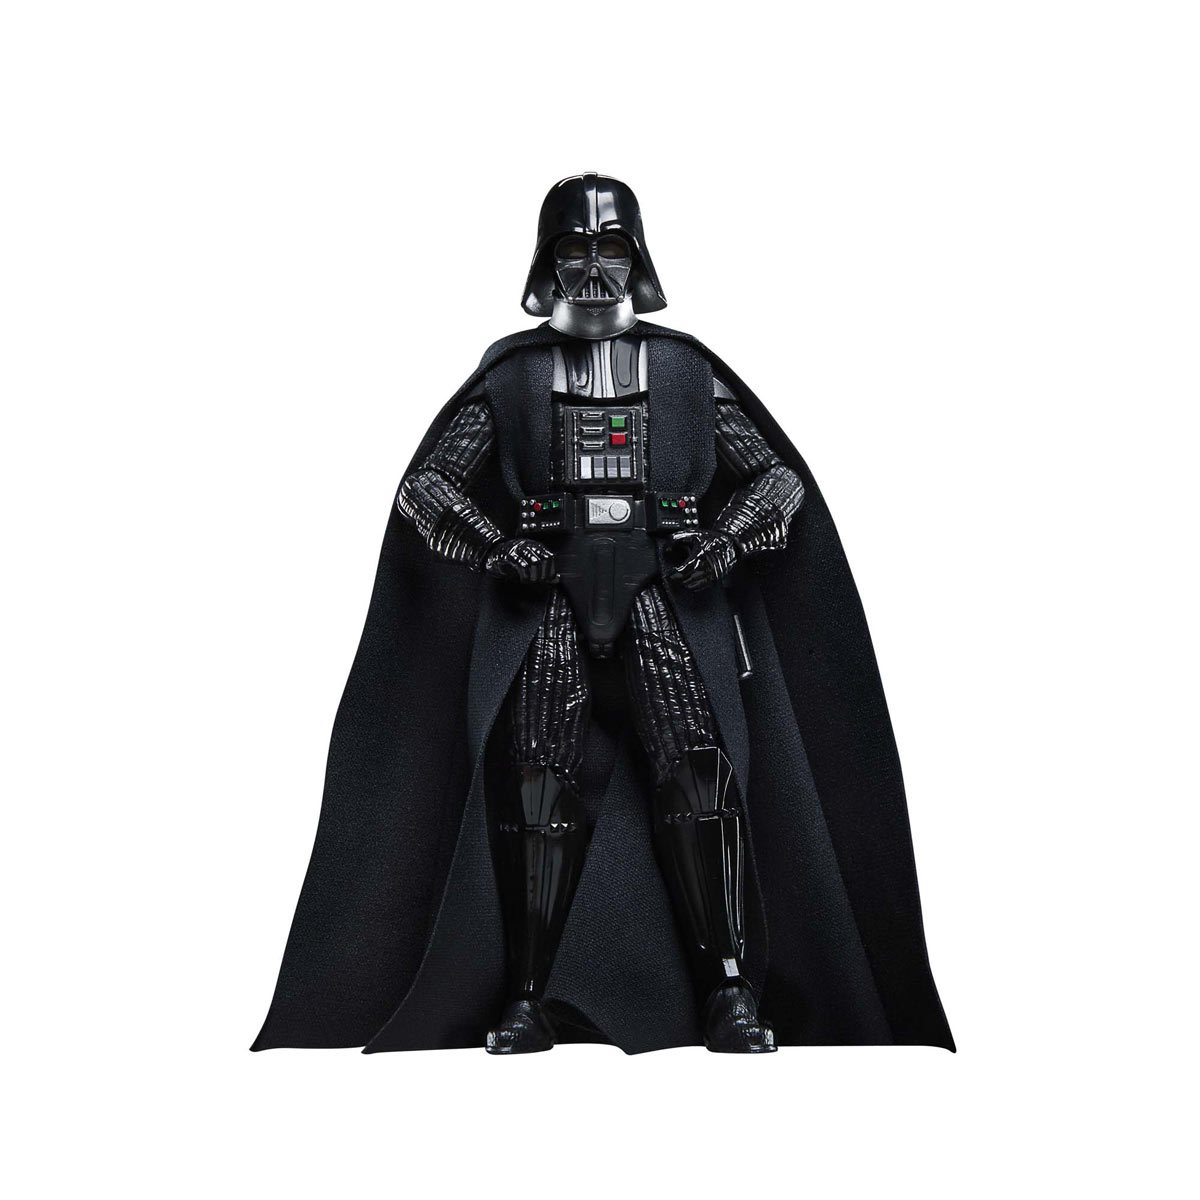 Star Wars The Black Series Darth Vader (A New Hope) 15cm G03645L00 5010996243768